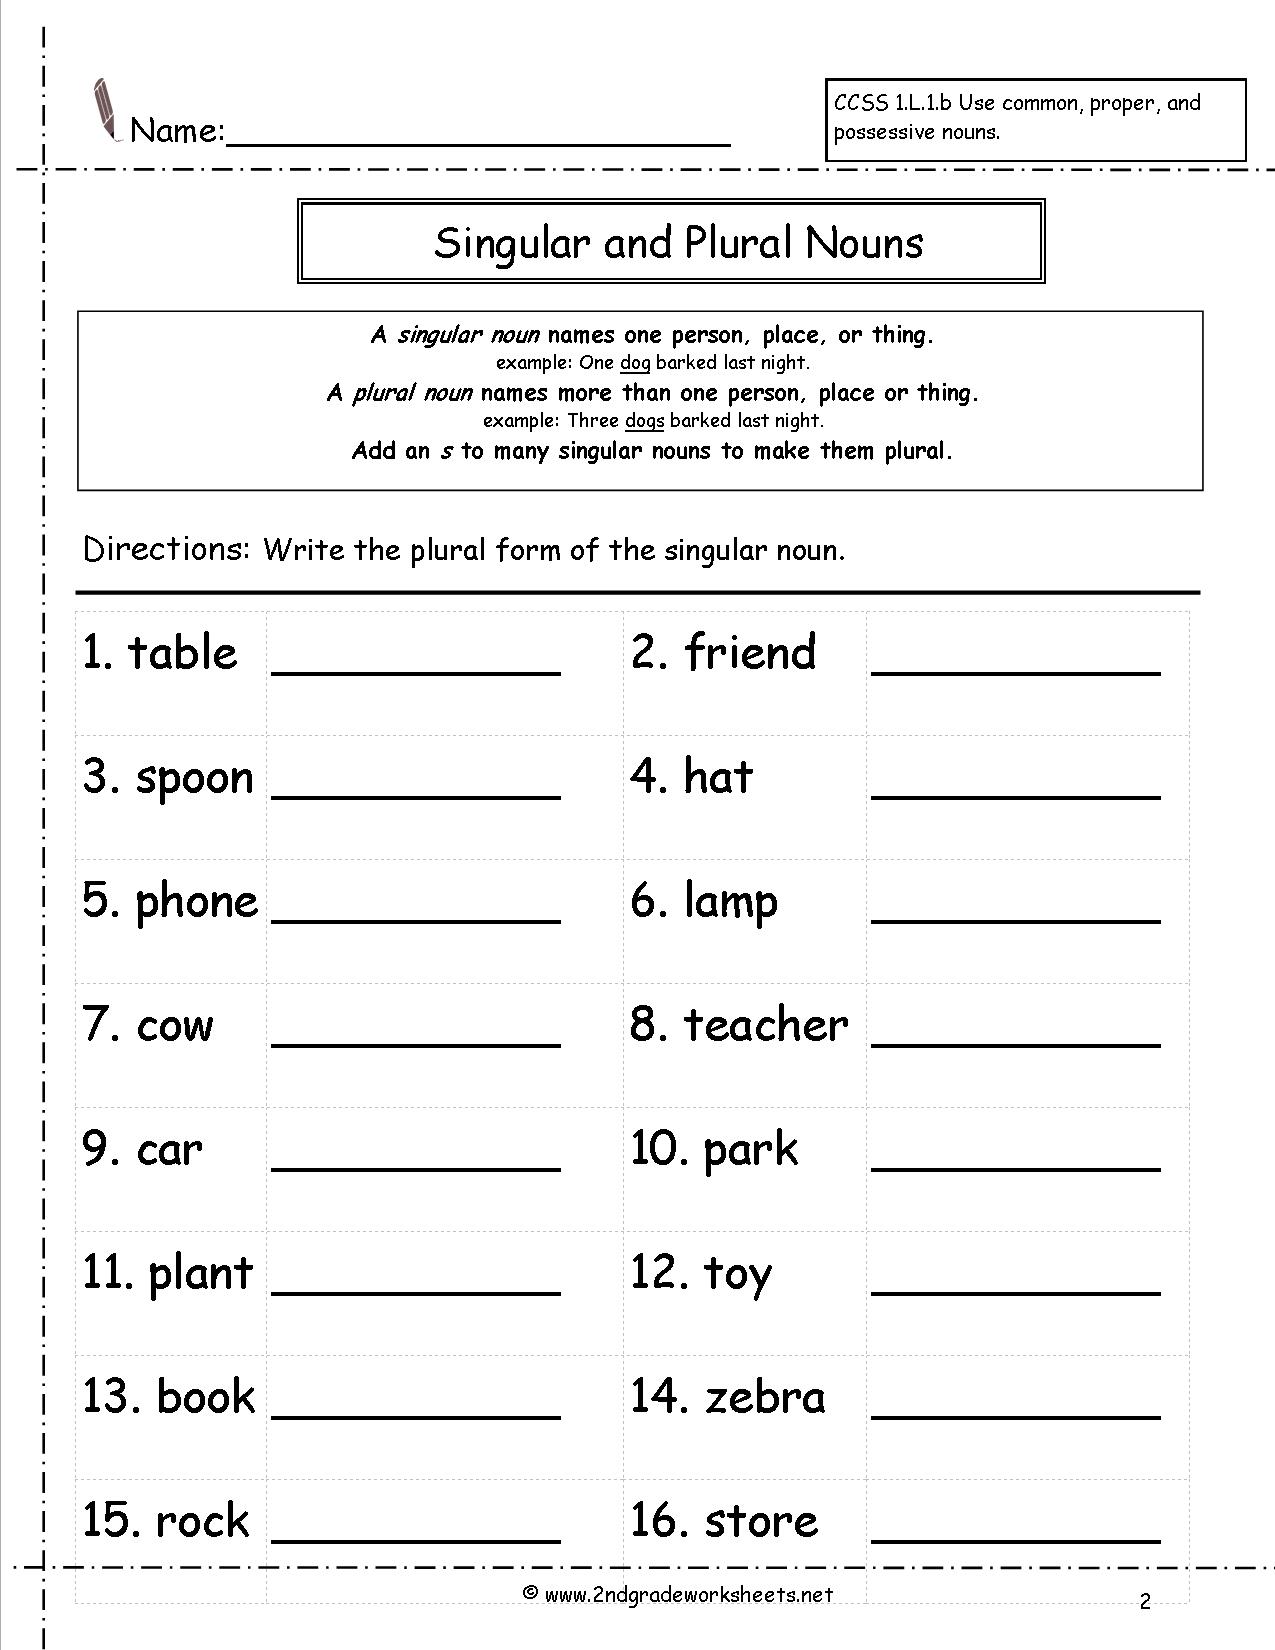 Irregular Plural Nouns Worksheet 2nd Grade